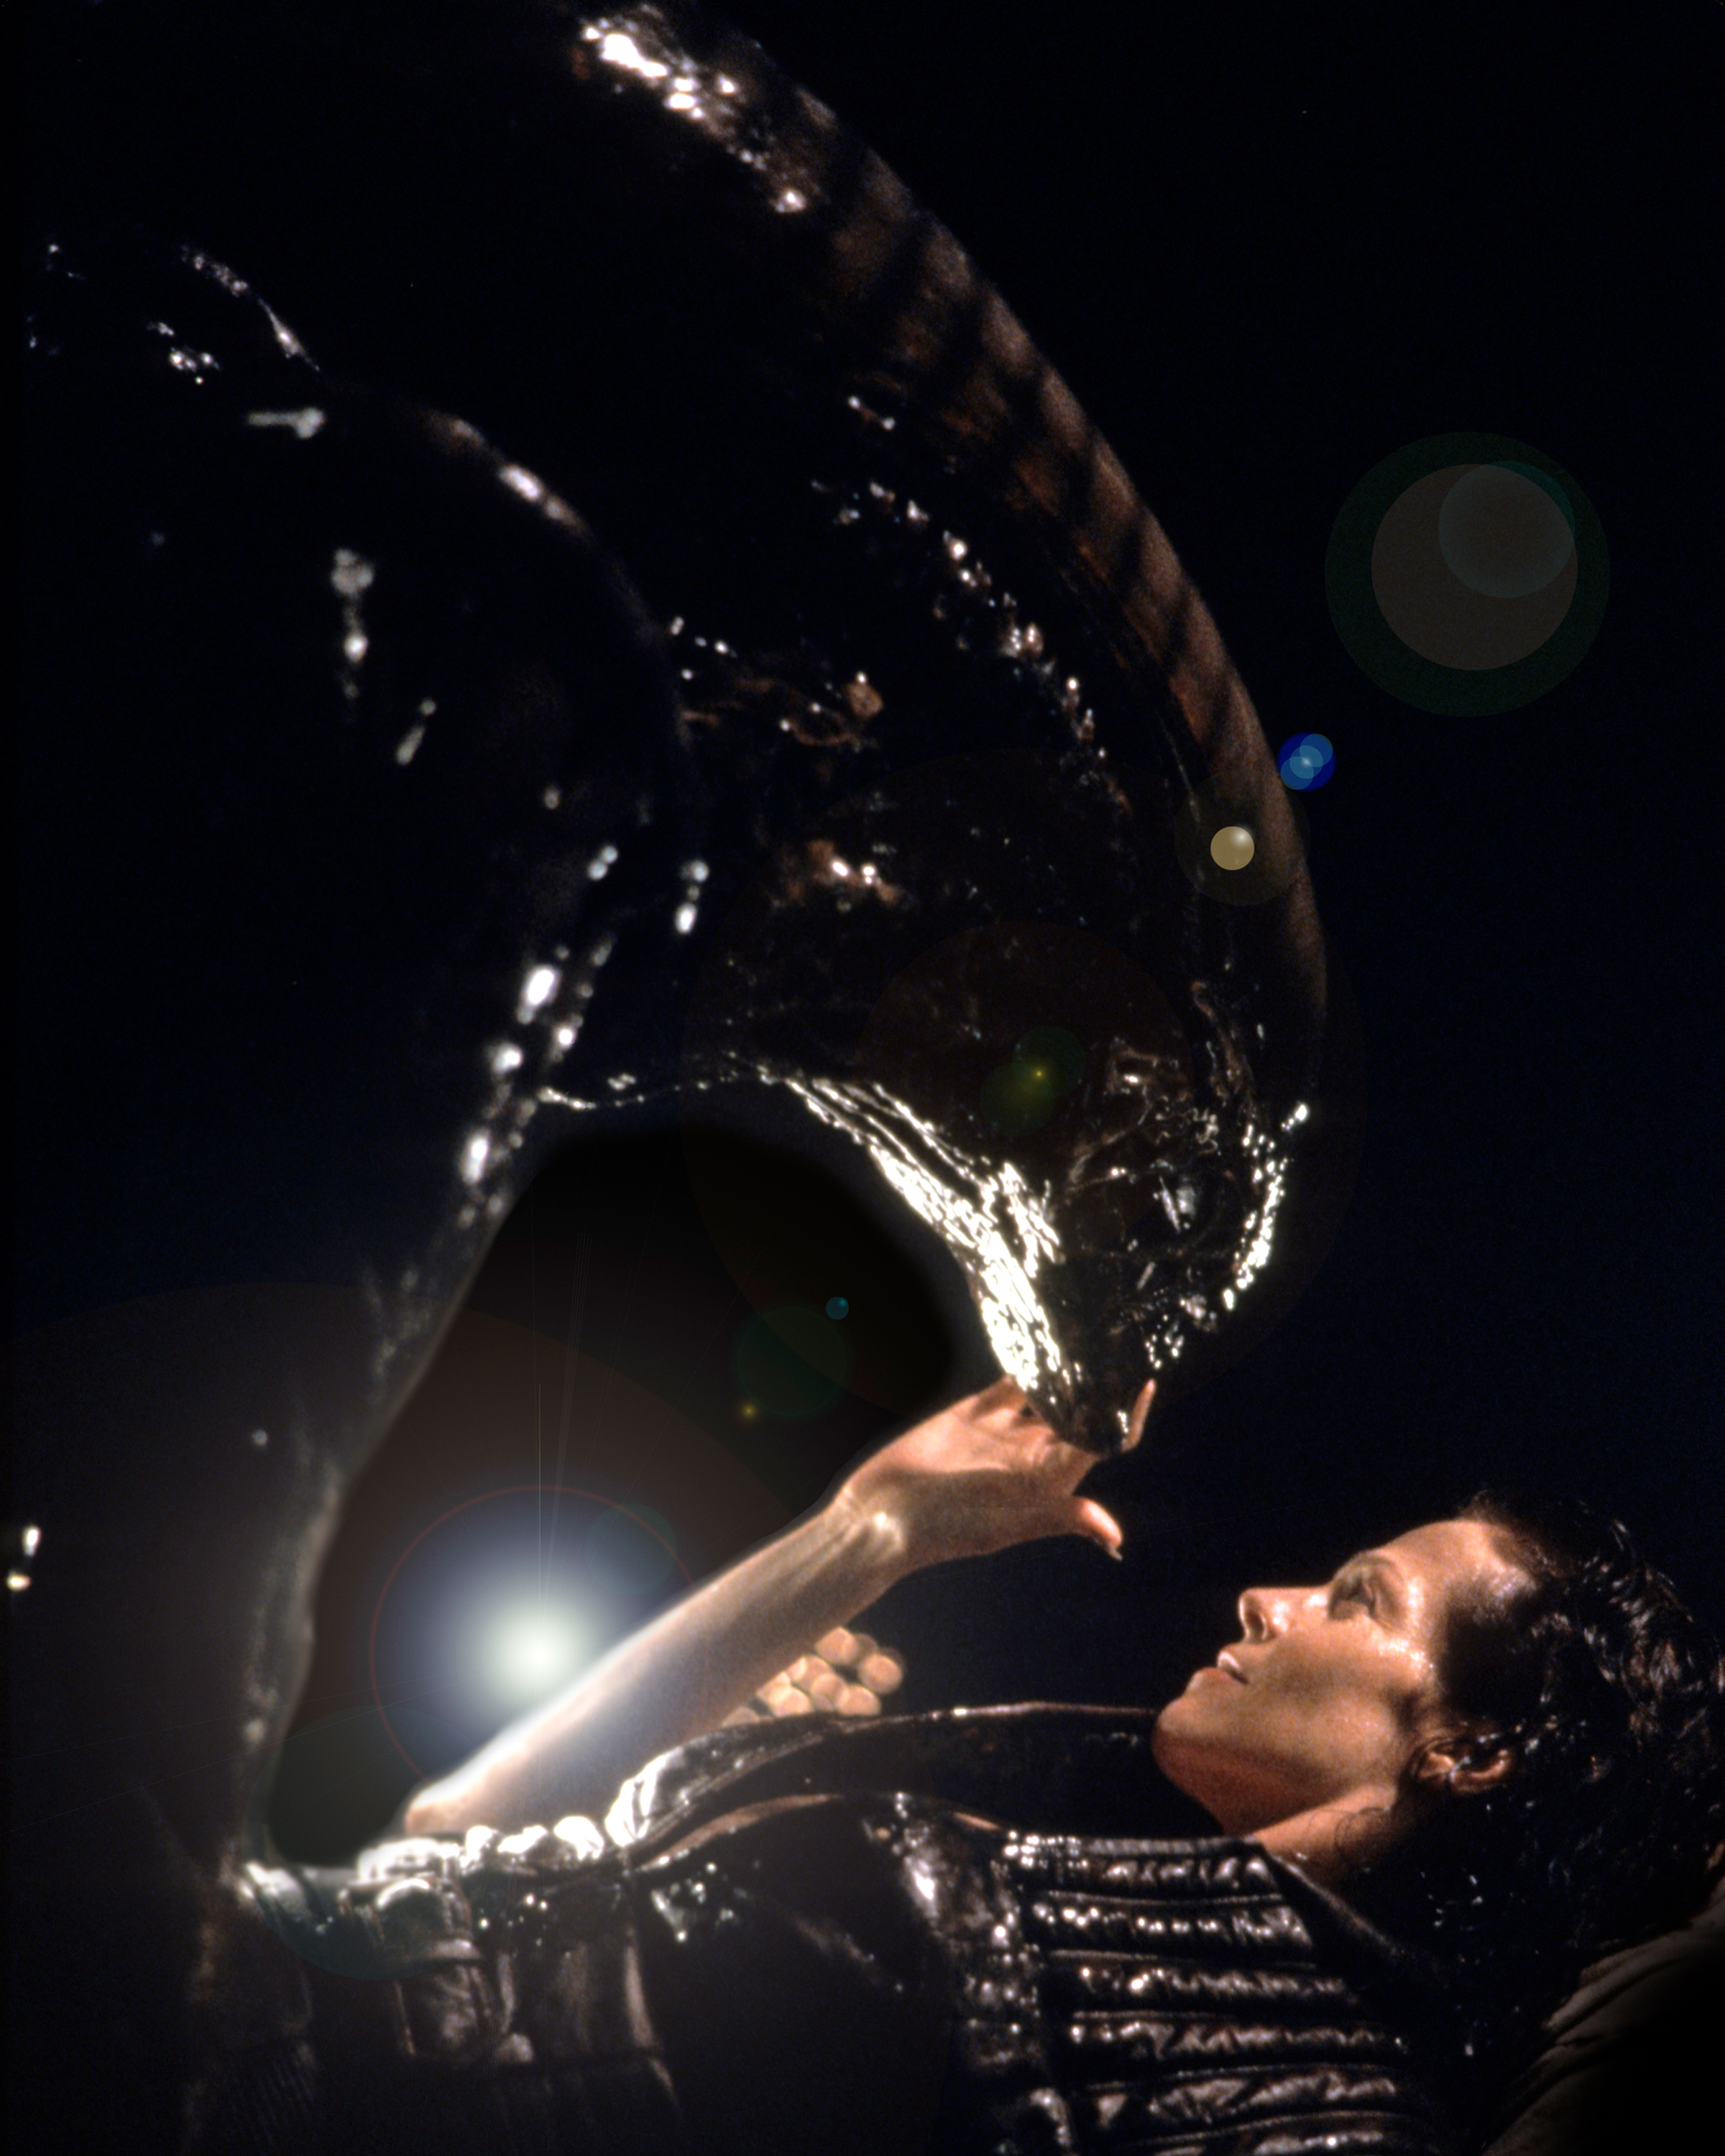 As the Alien with Sigourney Weaver in Alien Resurrection